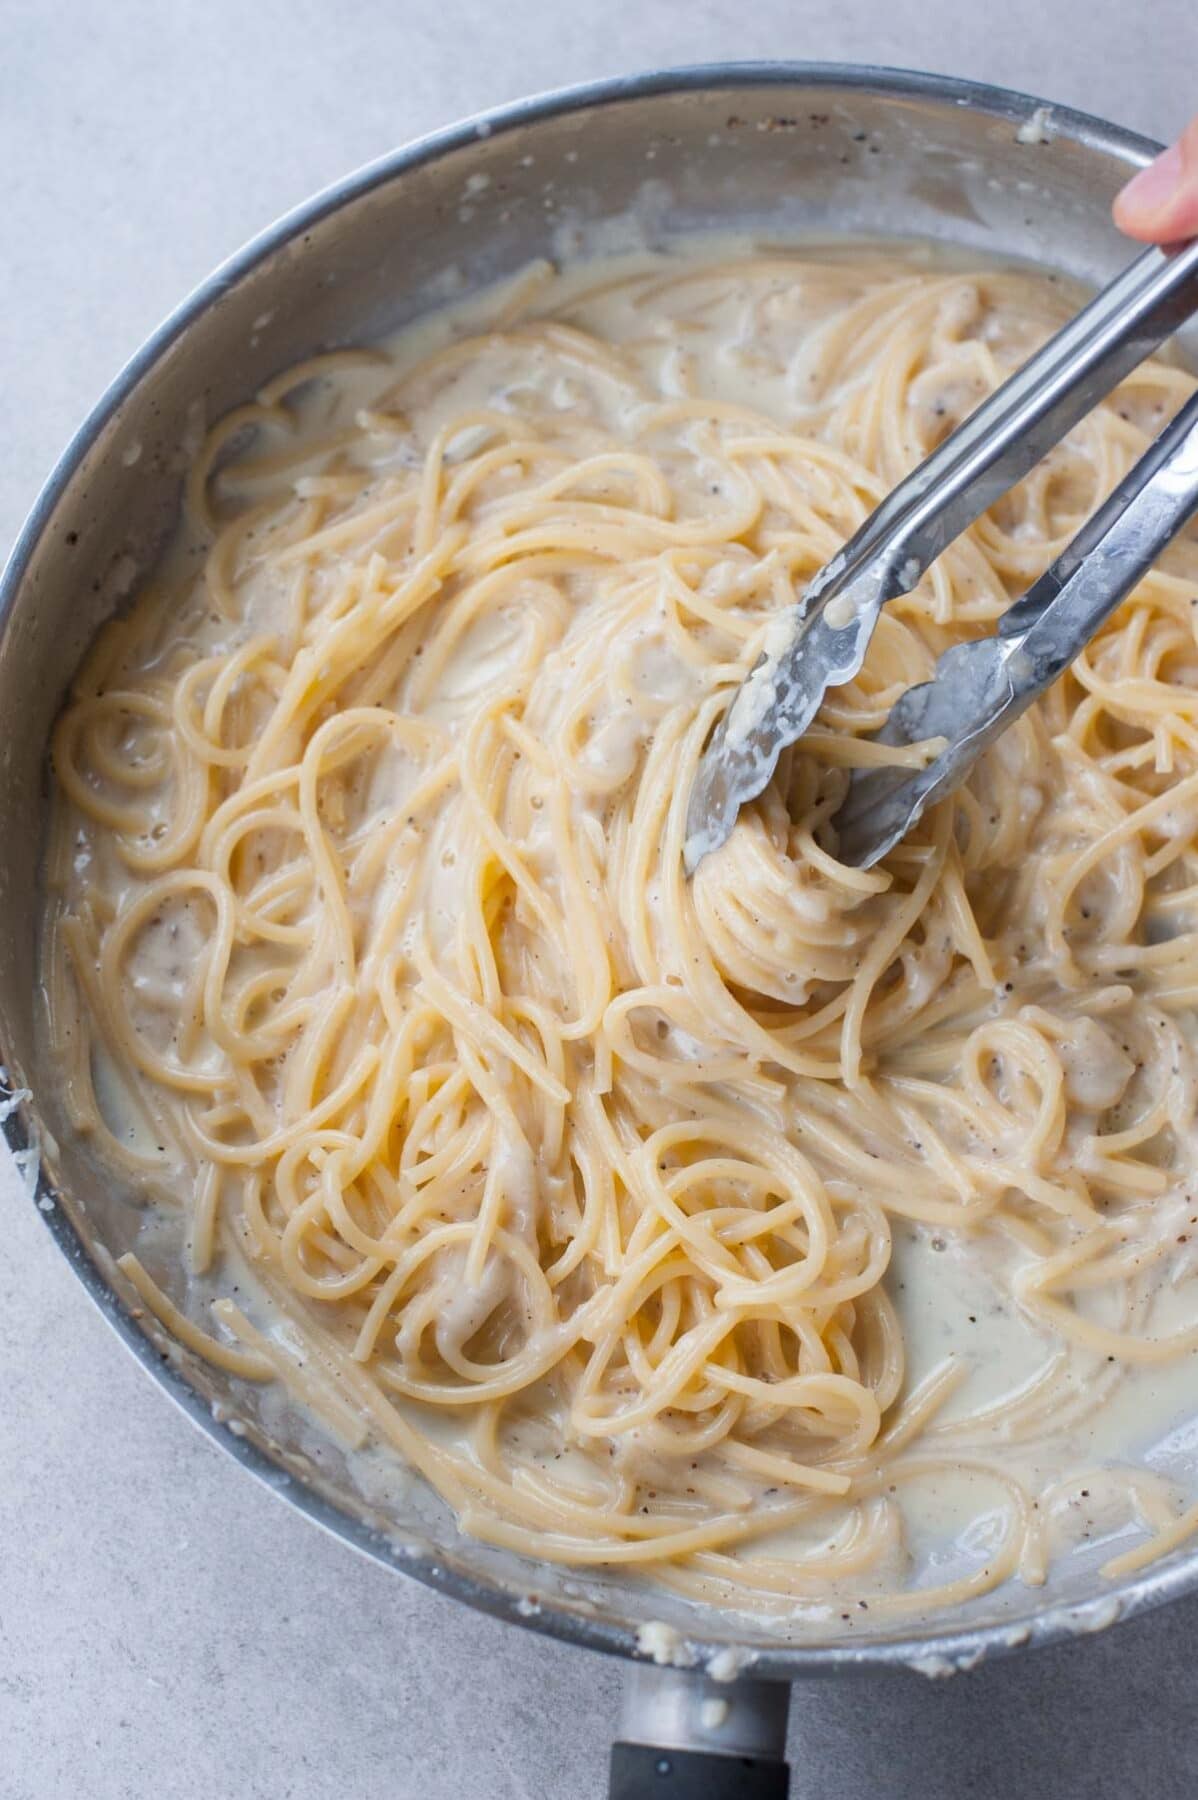 Spaghetti cacio e pepe in a metal pan stirred with kitchen tongs.